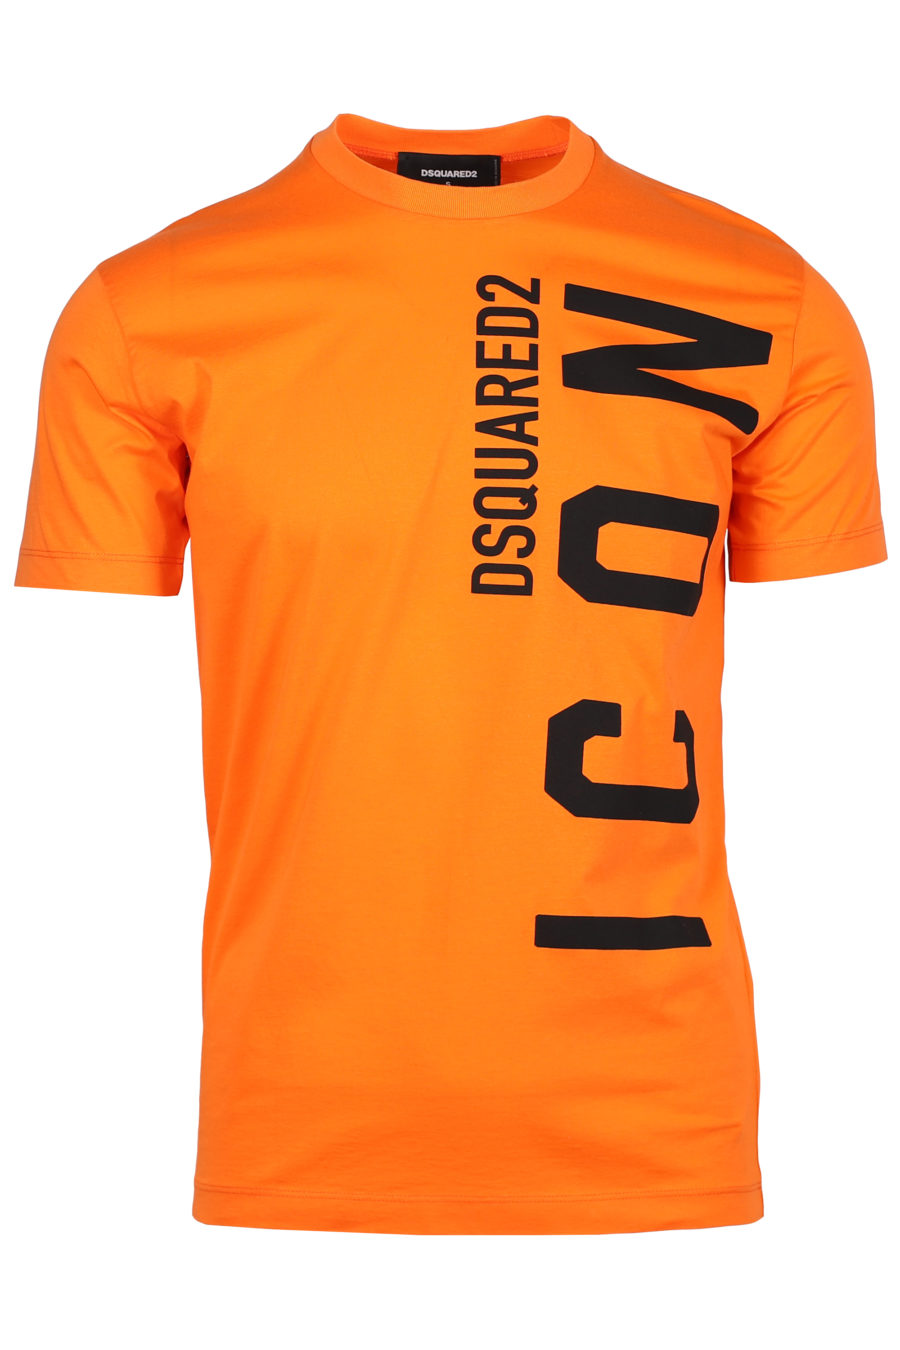 T-shirt orange avec logo vertical "Icon"" - IMG 2324